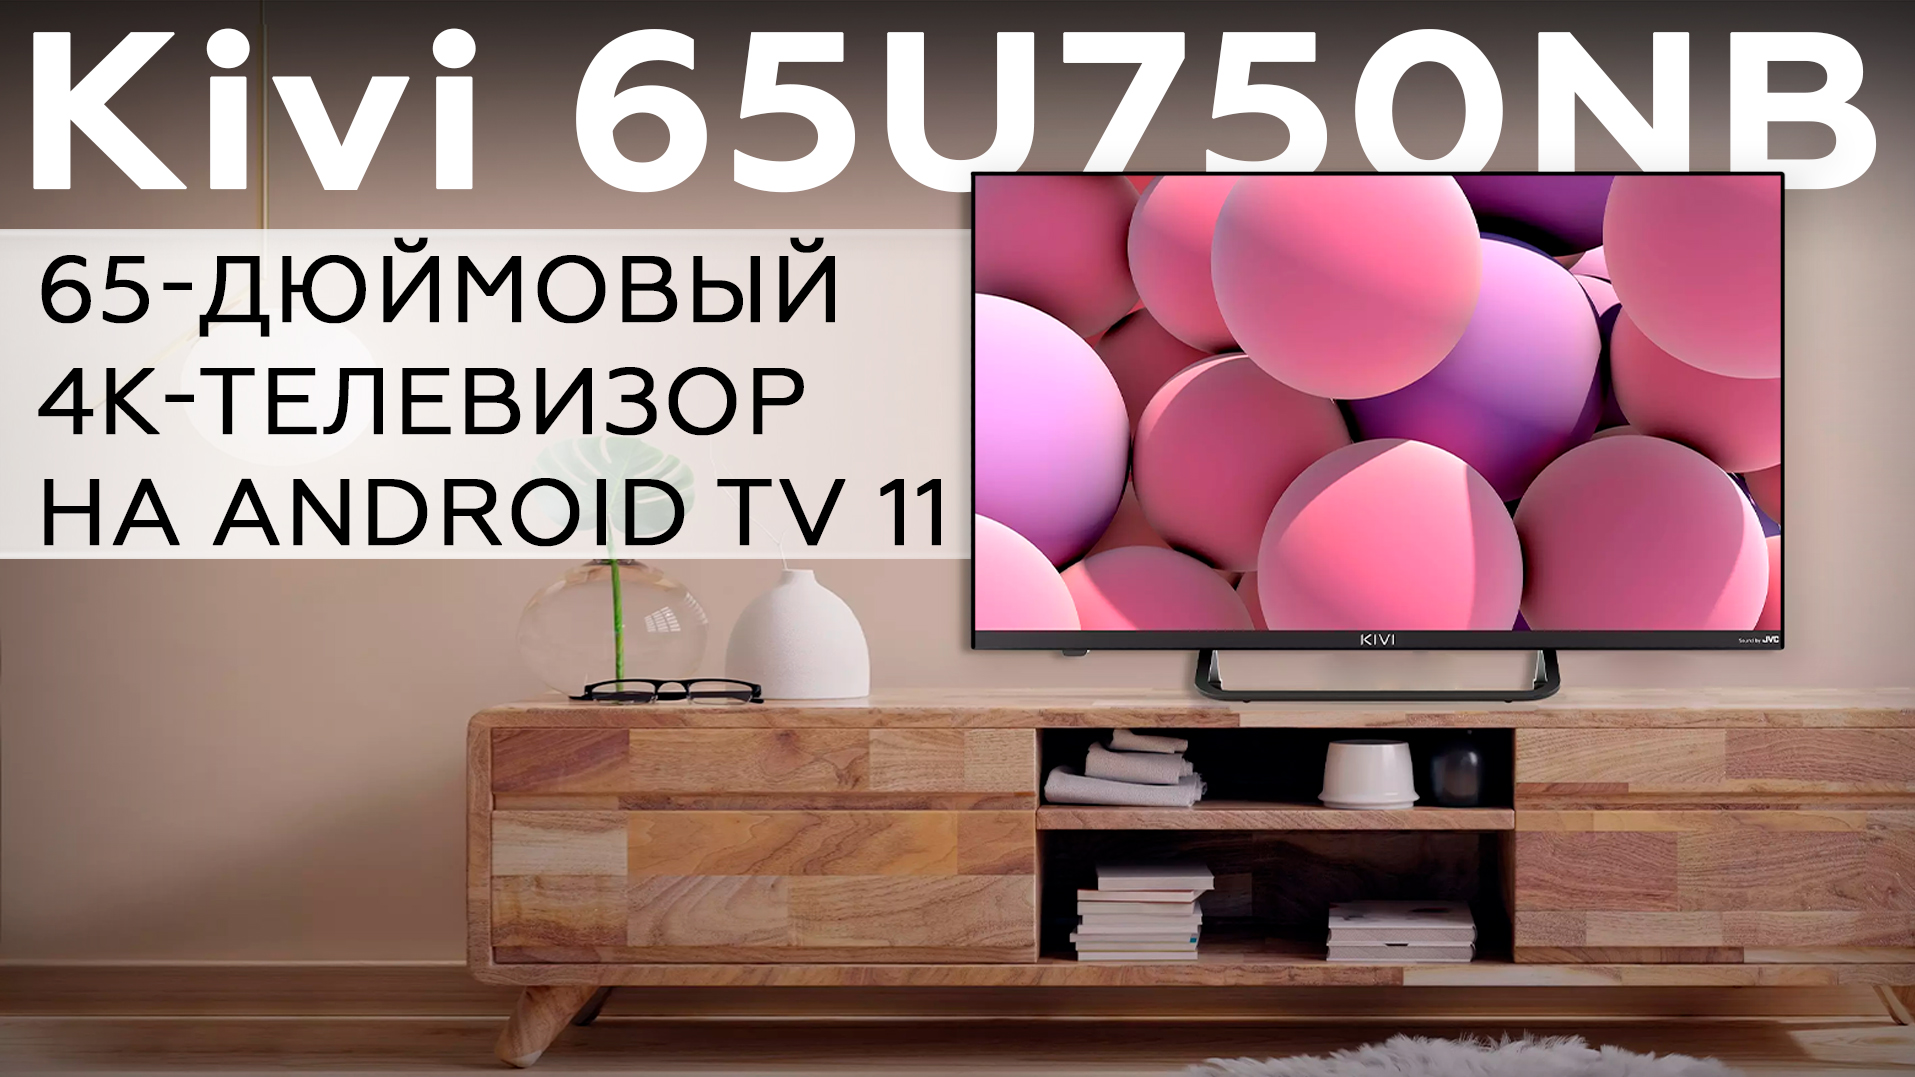 Обзор 65-дюймового 4К-телевизора Kivi 65U750NB на ОС Android TV 11